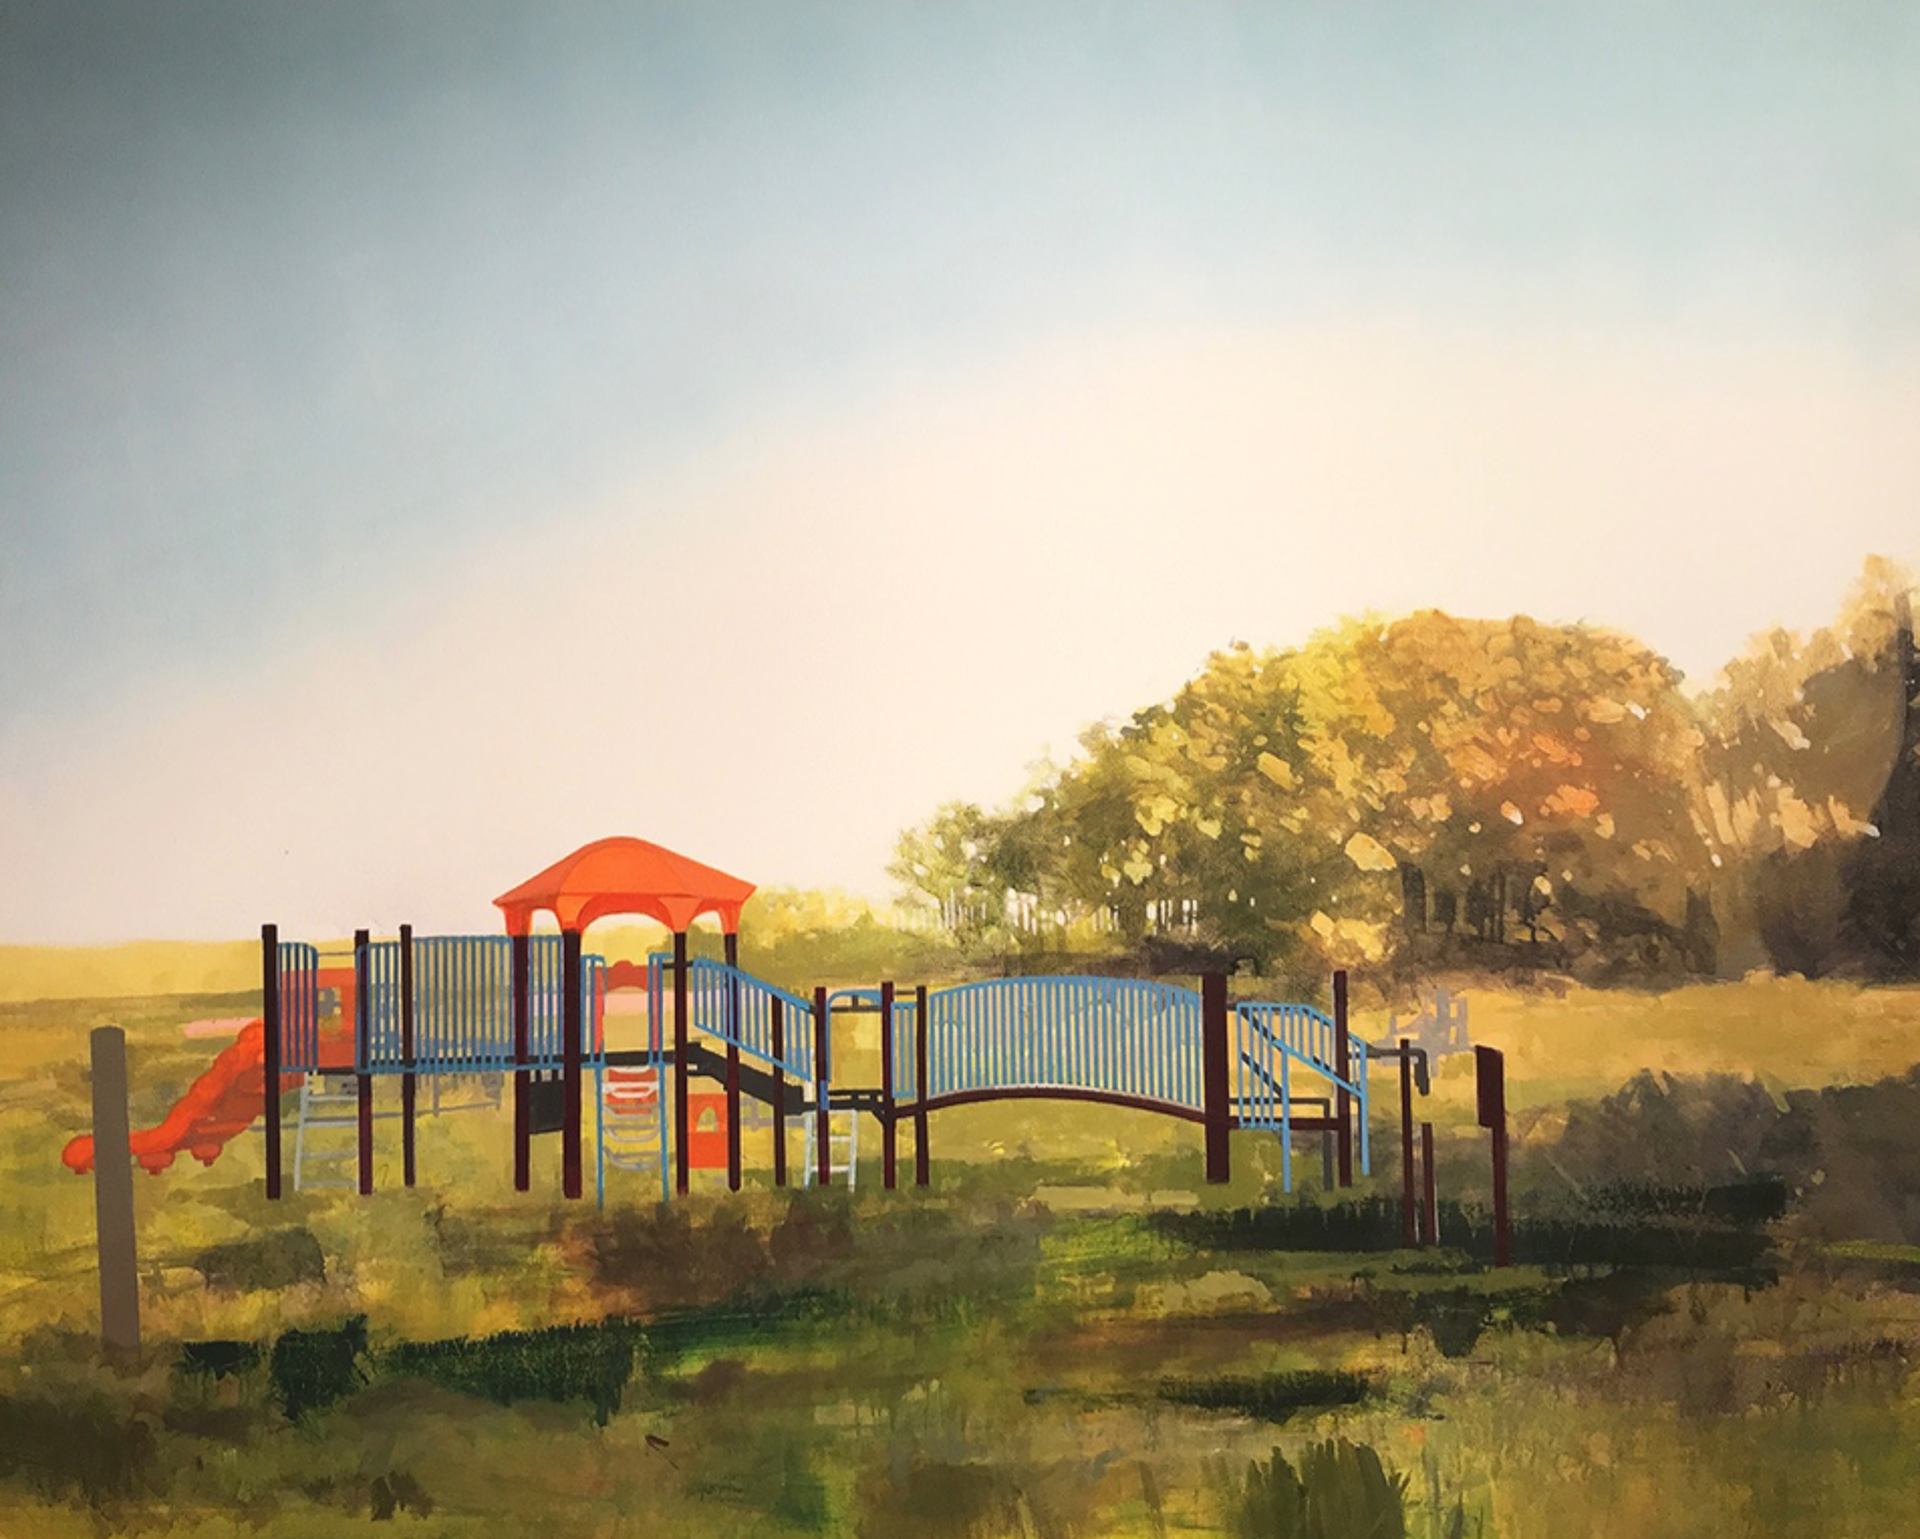 The Playground by Dan VanLandingham